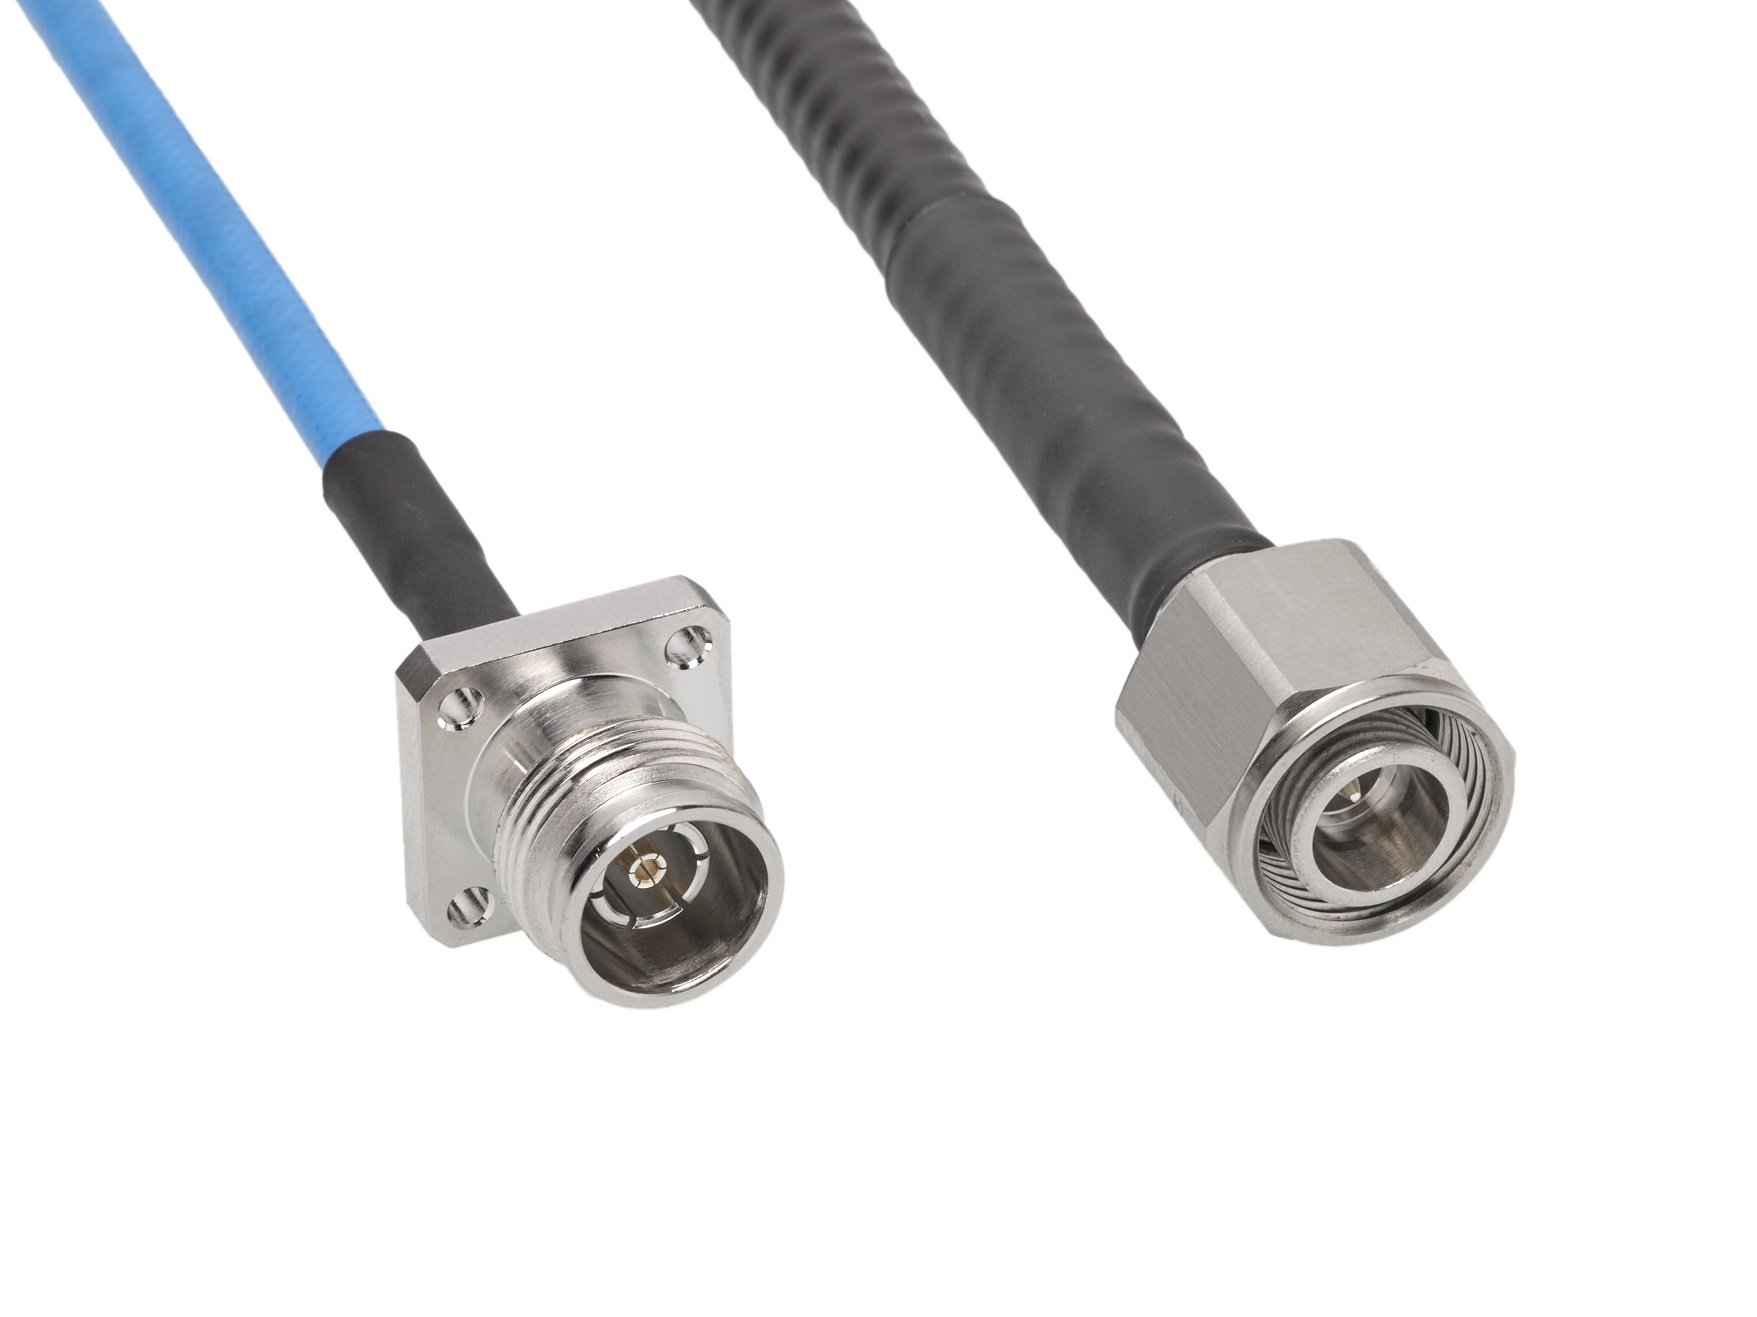 Molex 发布微型化 2.2-5 射频连接器系统与电缆组件